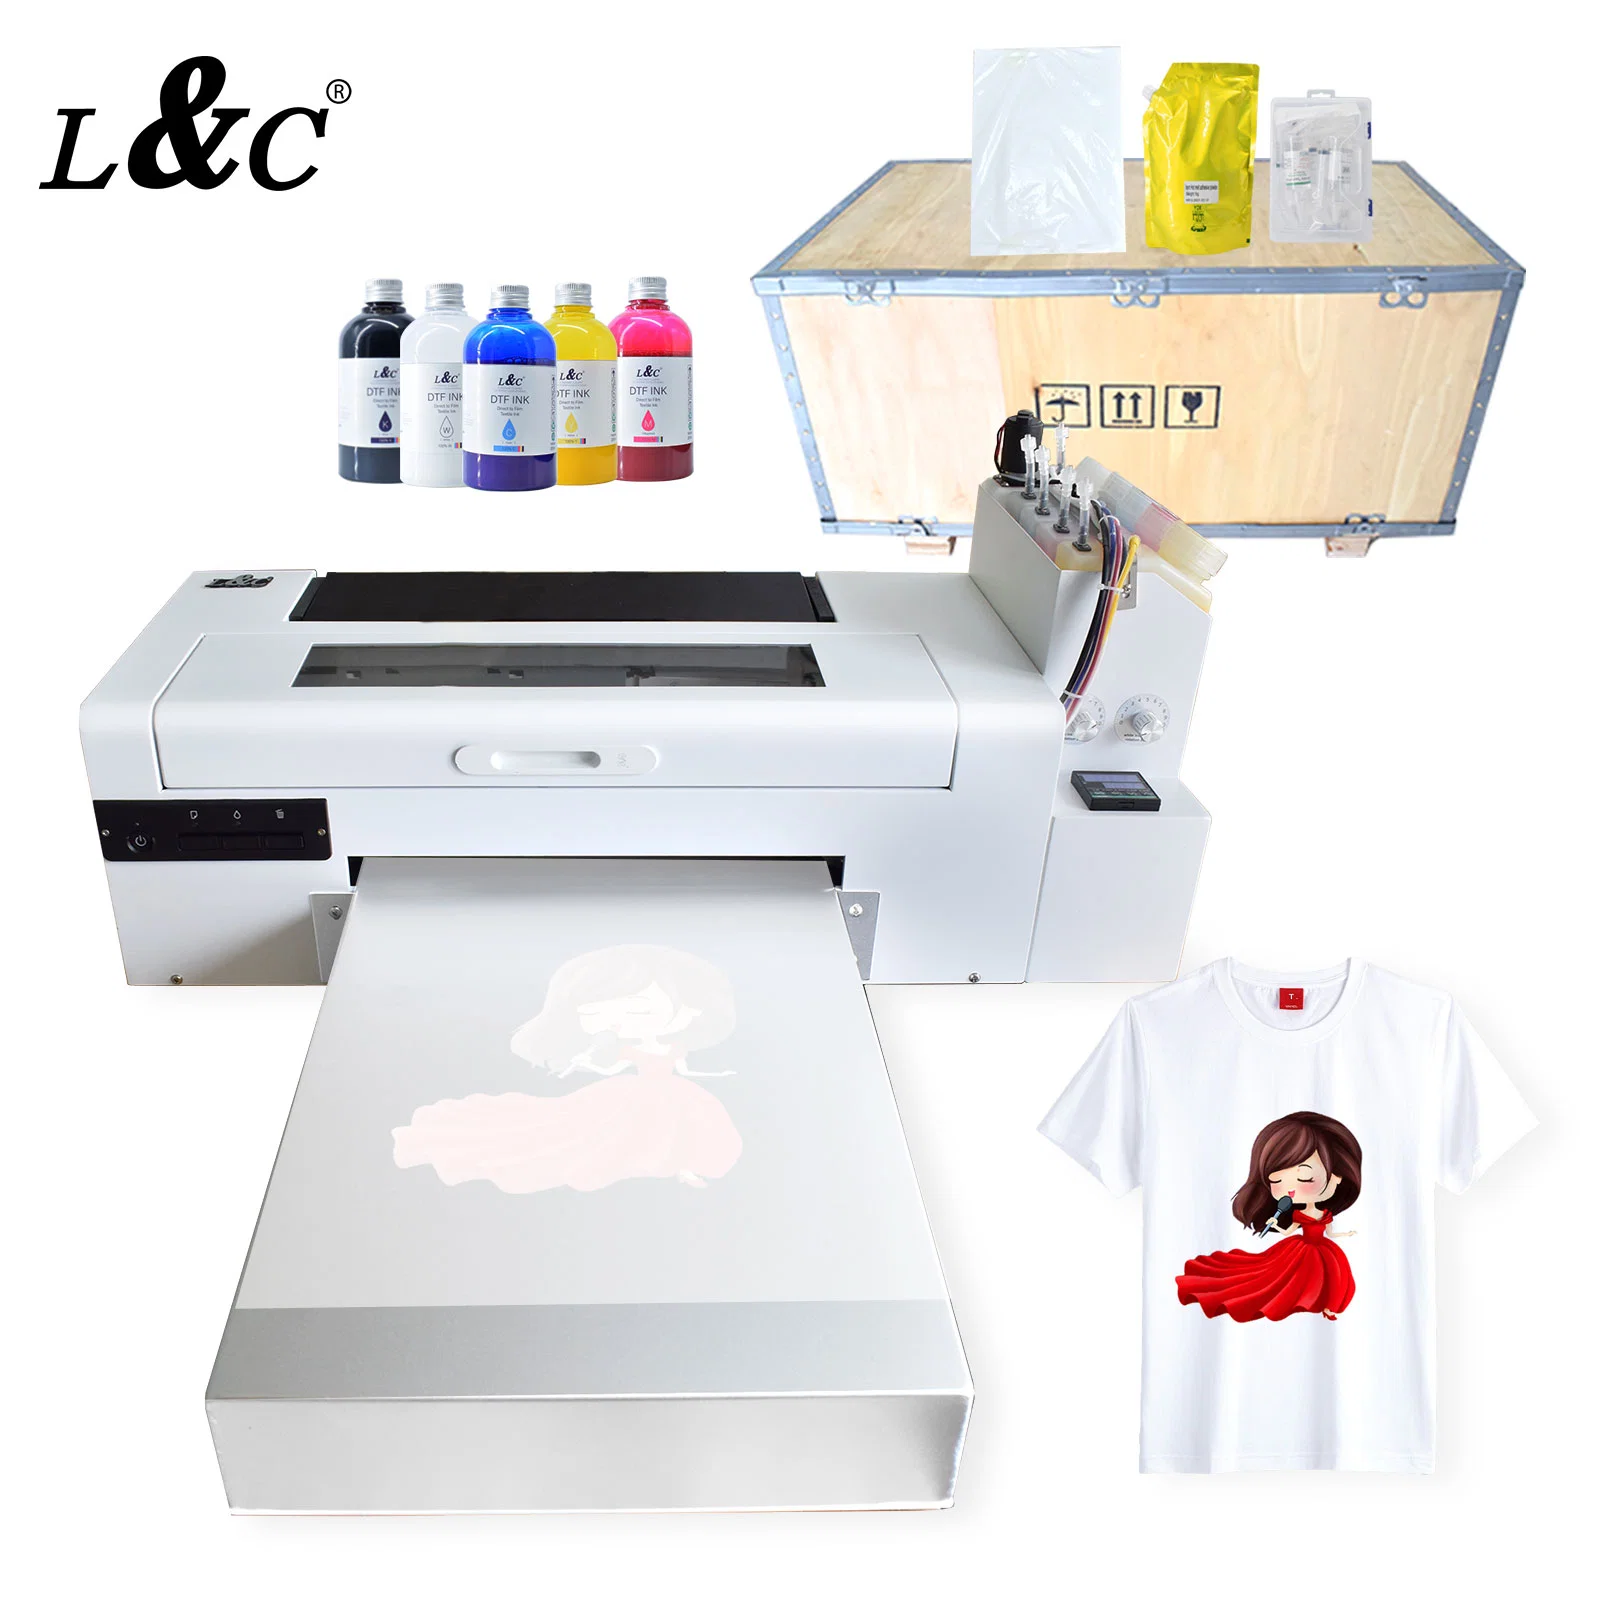 L&C Korean Hot Selling 2021 Dtf Printer 30cm L1800 A3 A4 Size 30 XP600 Dtf L805 Printer for T-Shirt